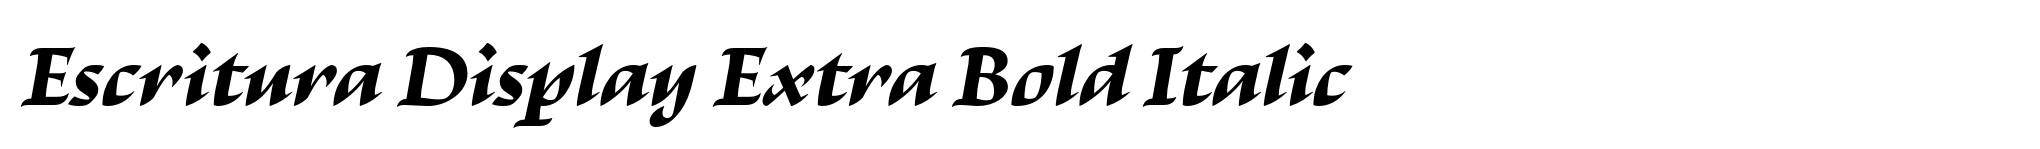 Escritura Display Extra Bold Italic image